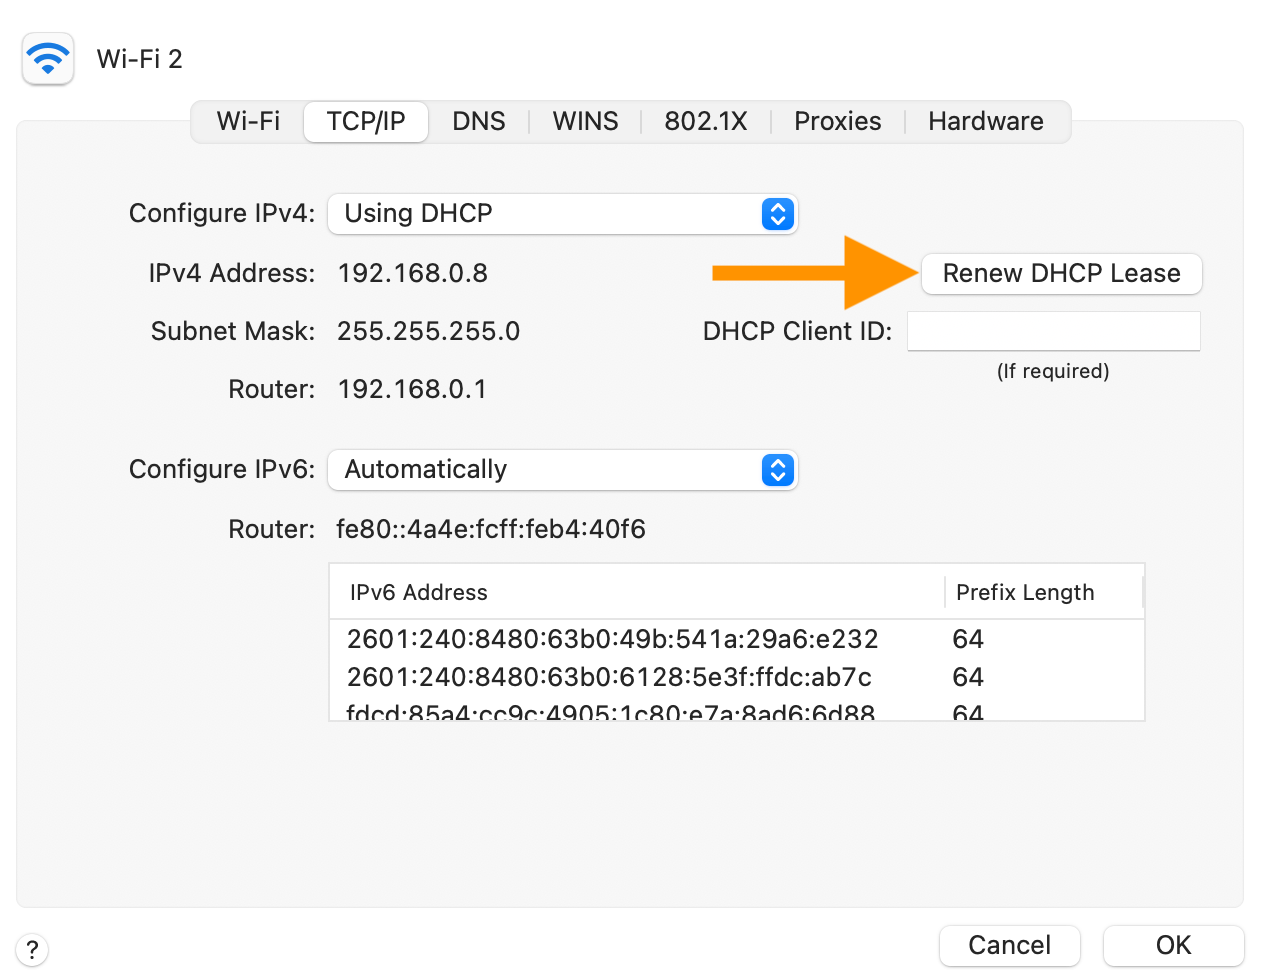 mac says wifi has self assigned ip address